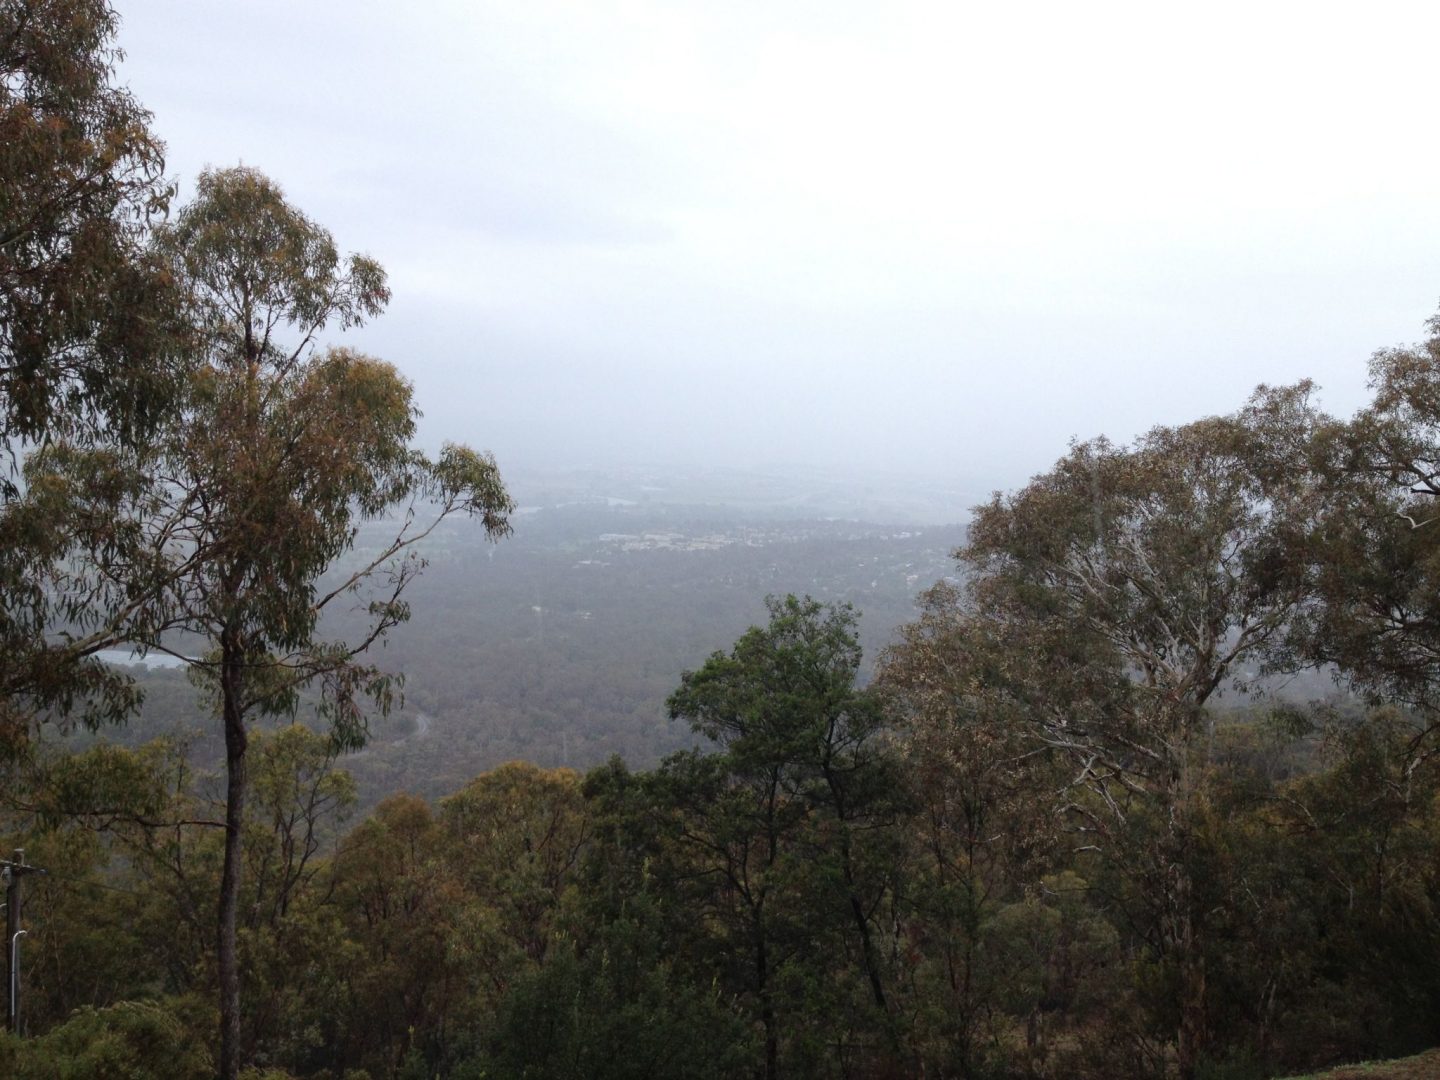 Misty views of Canberra, Australia